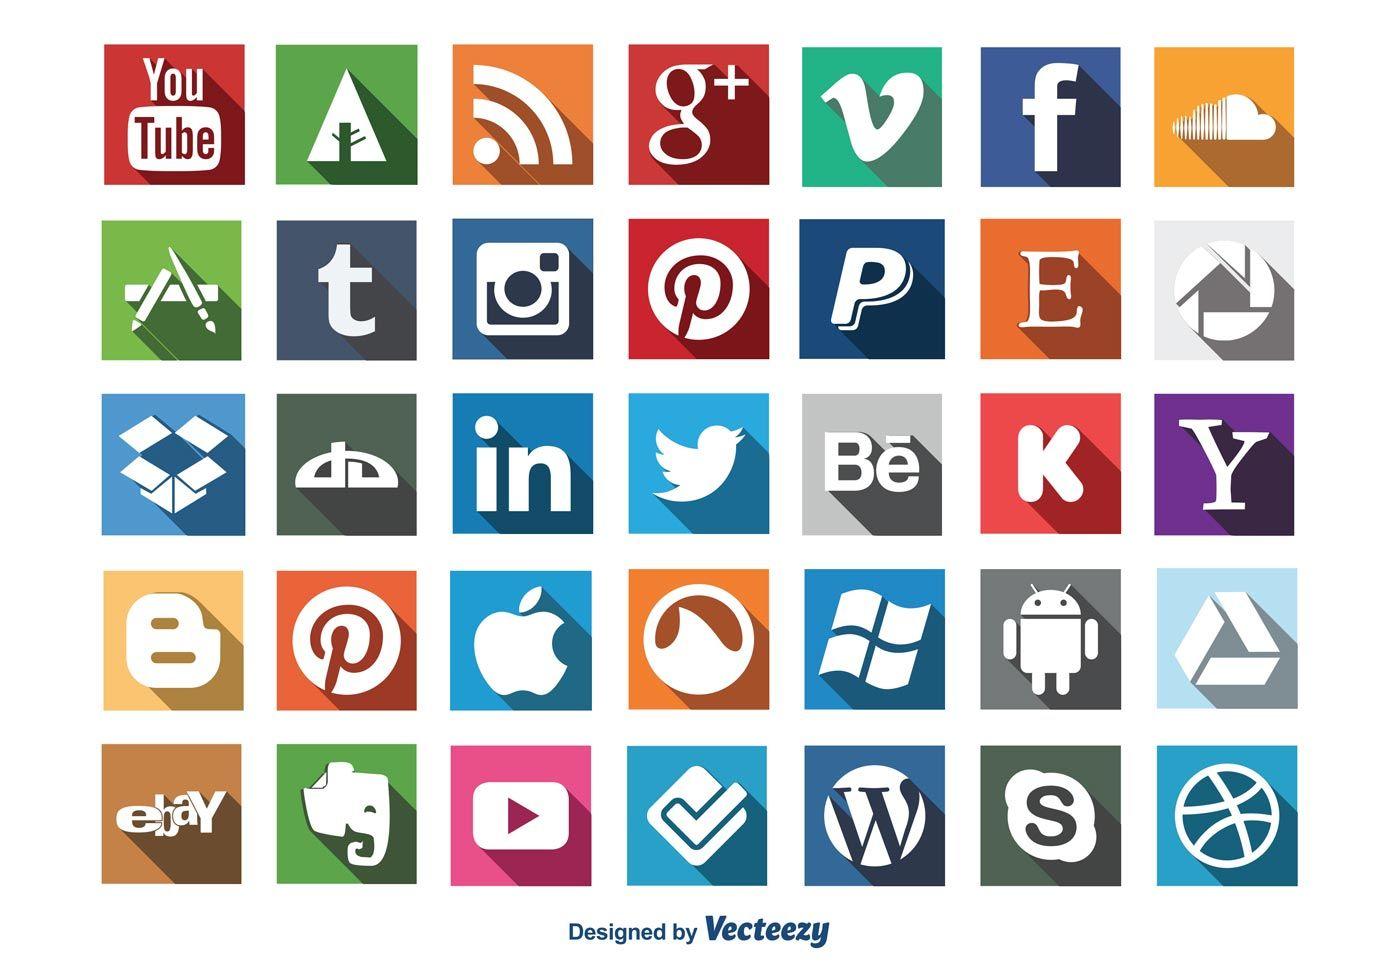 Top Social Media Logo - 50+ Free, High-Quality Social Media Icon Sets (Something for Everyone)